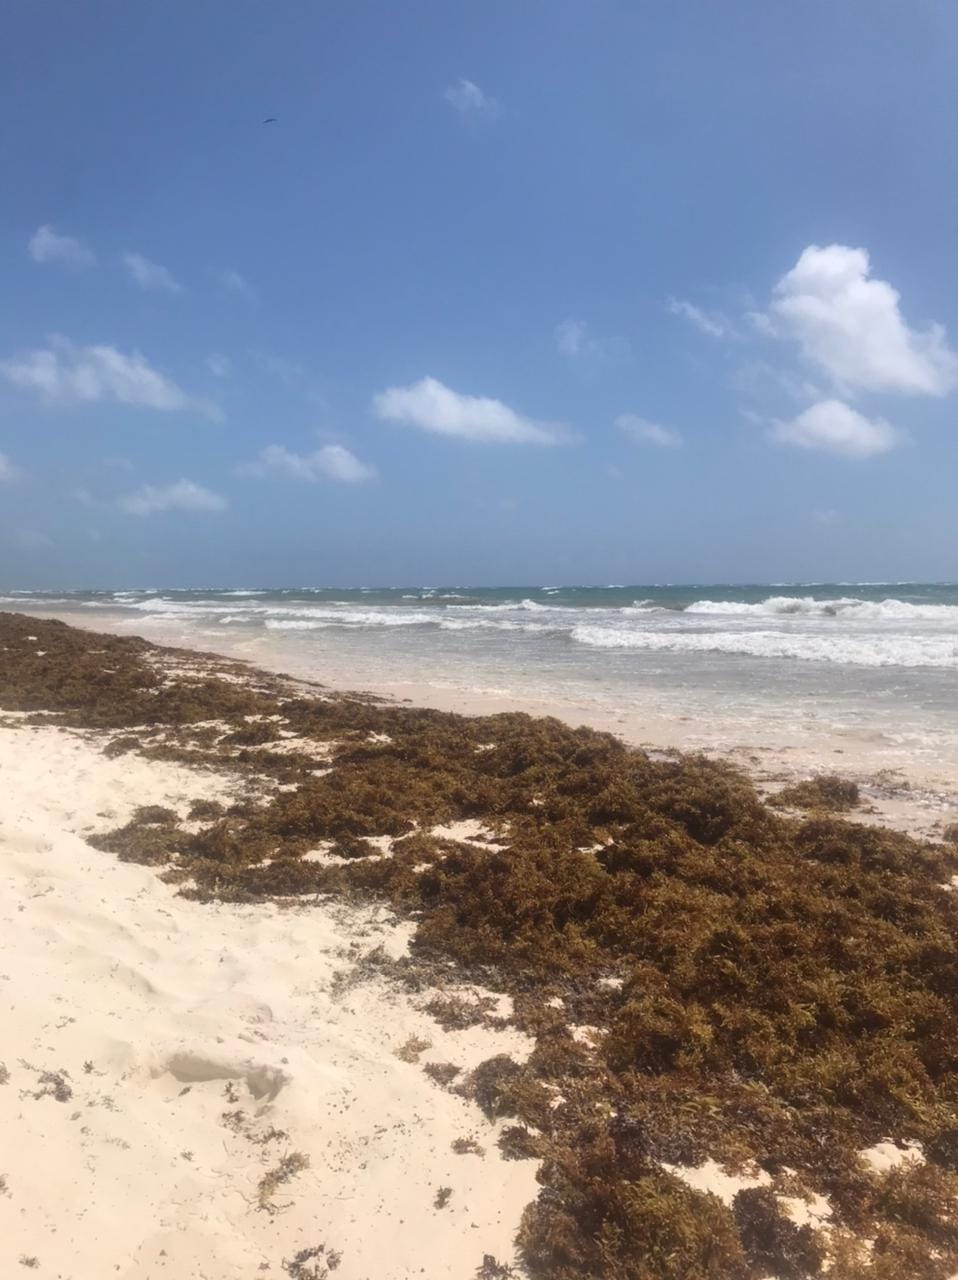 More sargassum seaweed arrives on Tulum's shores